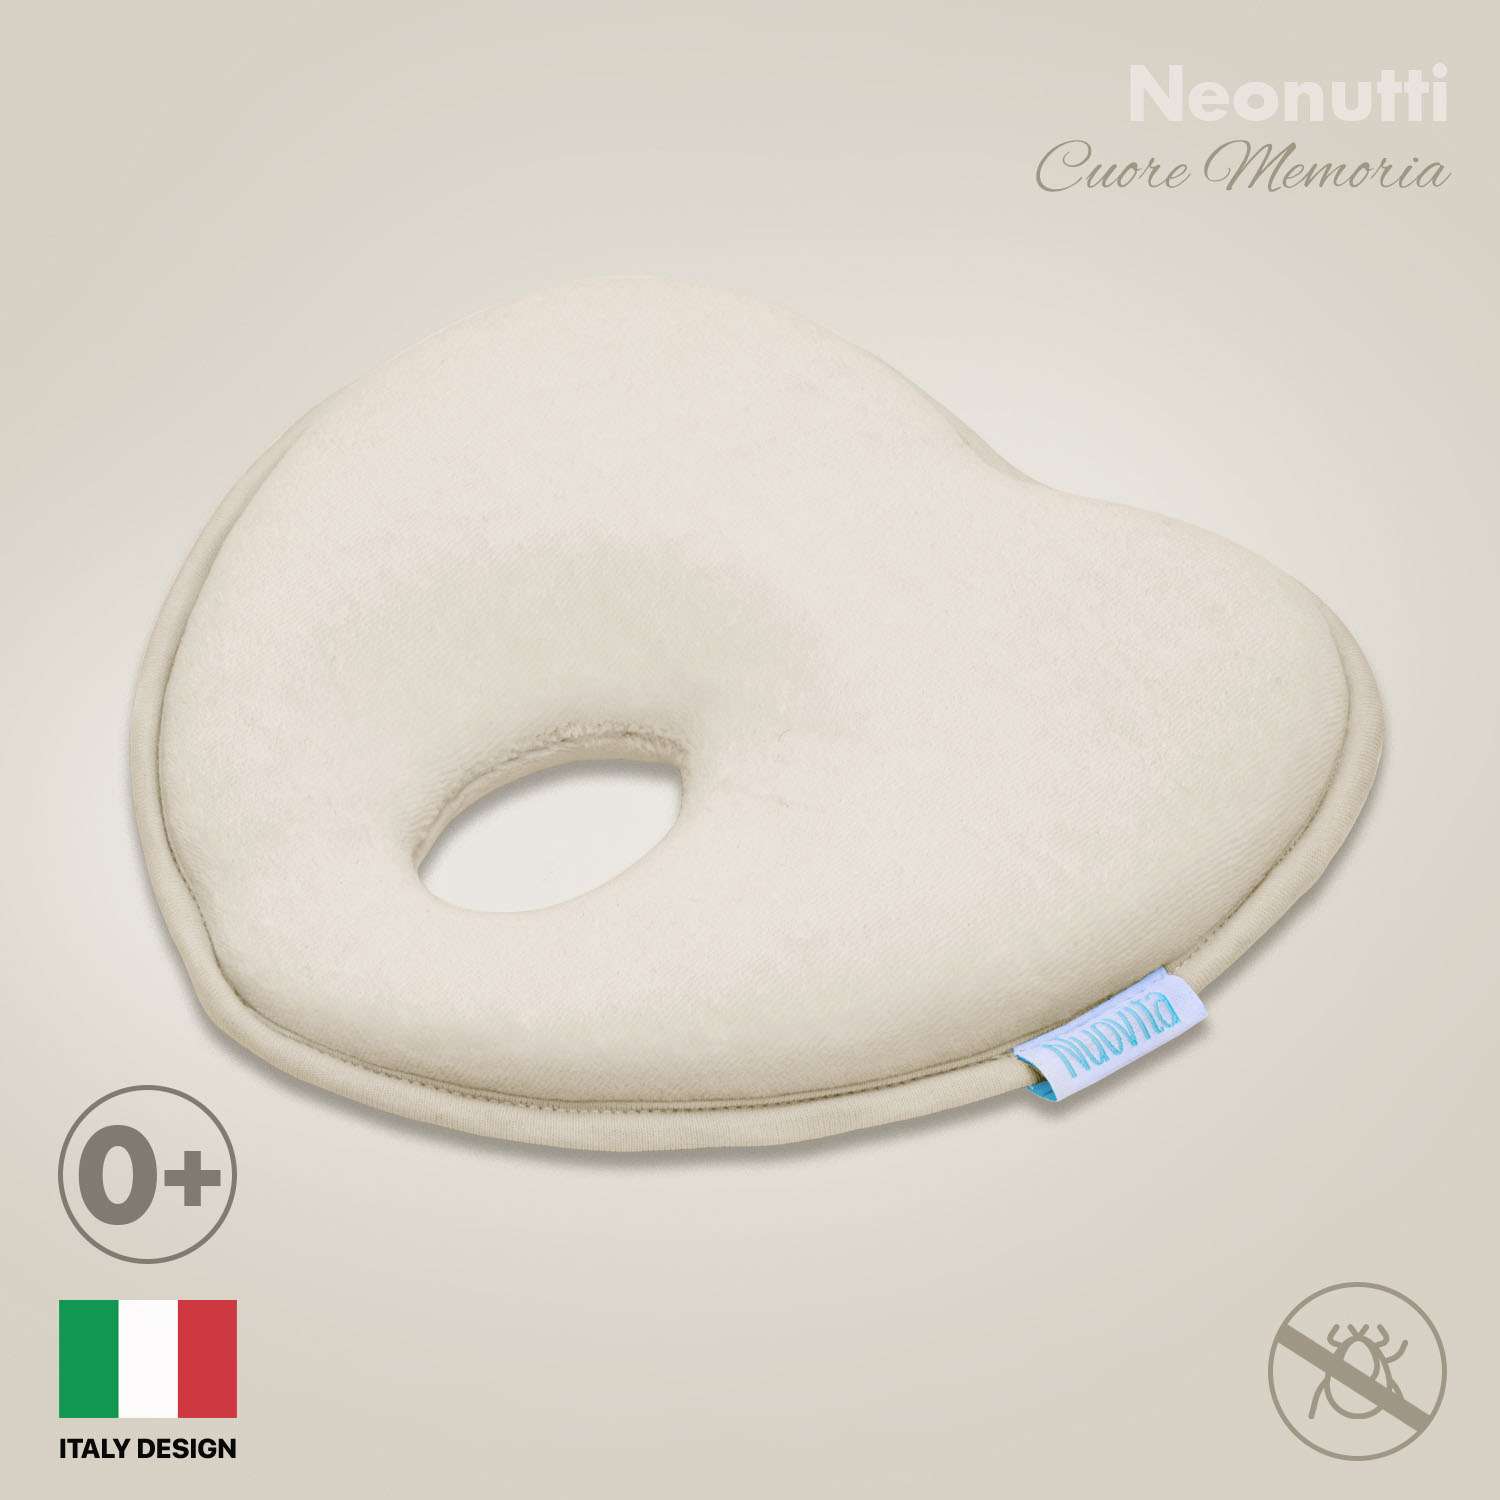 Подушка для новорожденного Nuovita NEONUTTI Cuore Memoria кремовый - фото 2